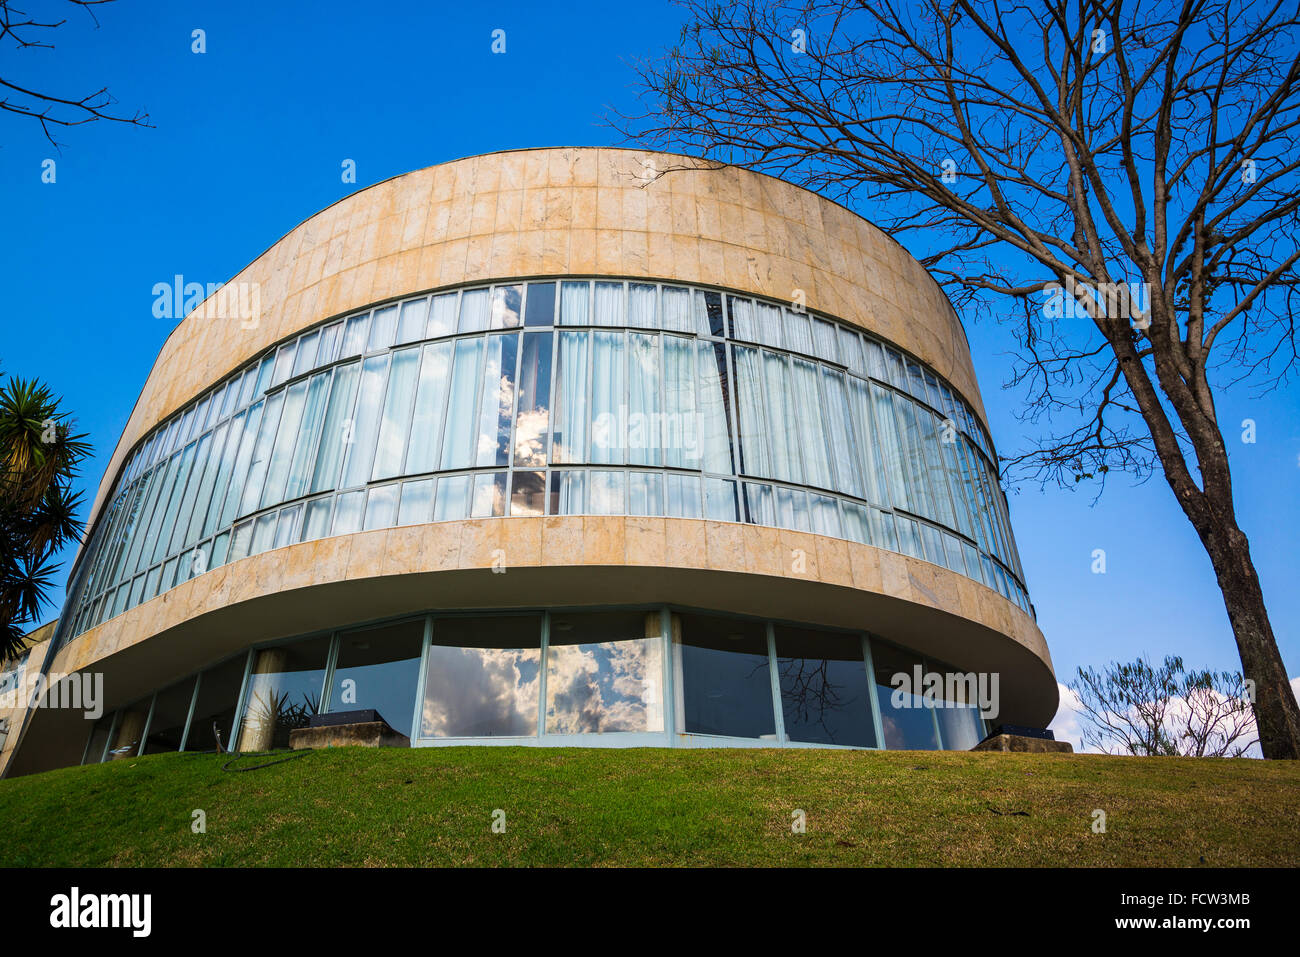 Il Museu de Arte Da Pampulha, arte museo progettato dall architetto Oscar Niemeyer, Pampulha, Belo Horizonte, Minas Gerais, Brasile Foto Stock